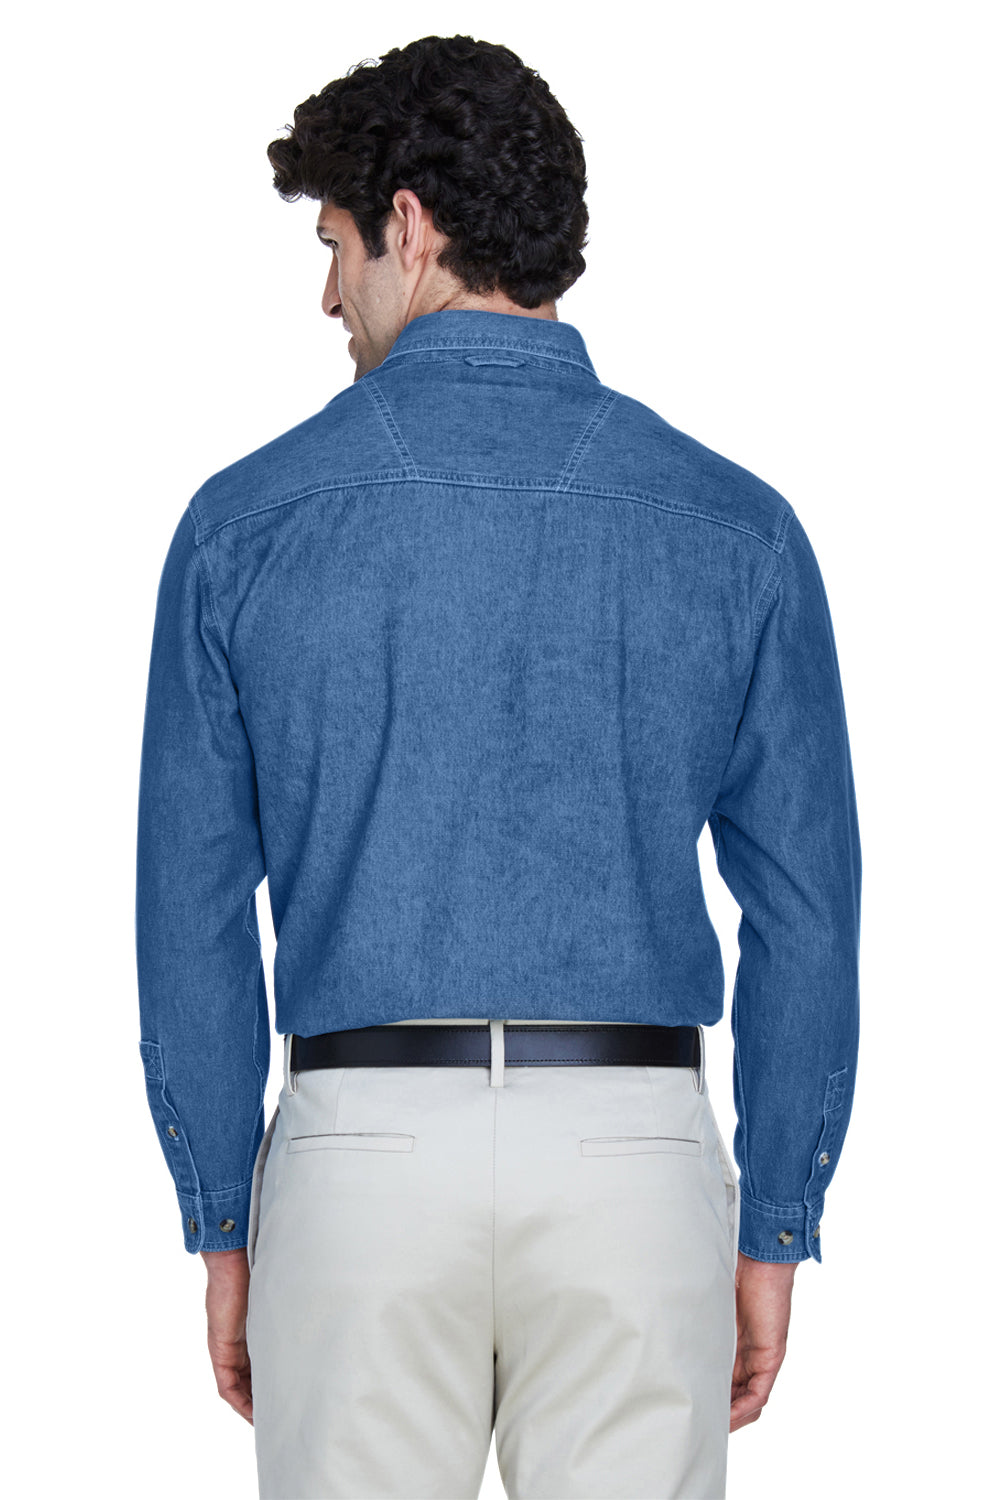 UltraClub 8960 Mens Cypress Denim Long Sleeve Button Down Shirt w/ Pocket Indigo Blue Back